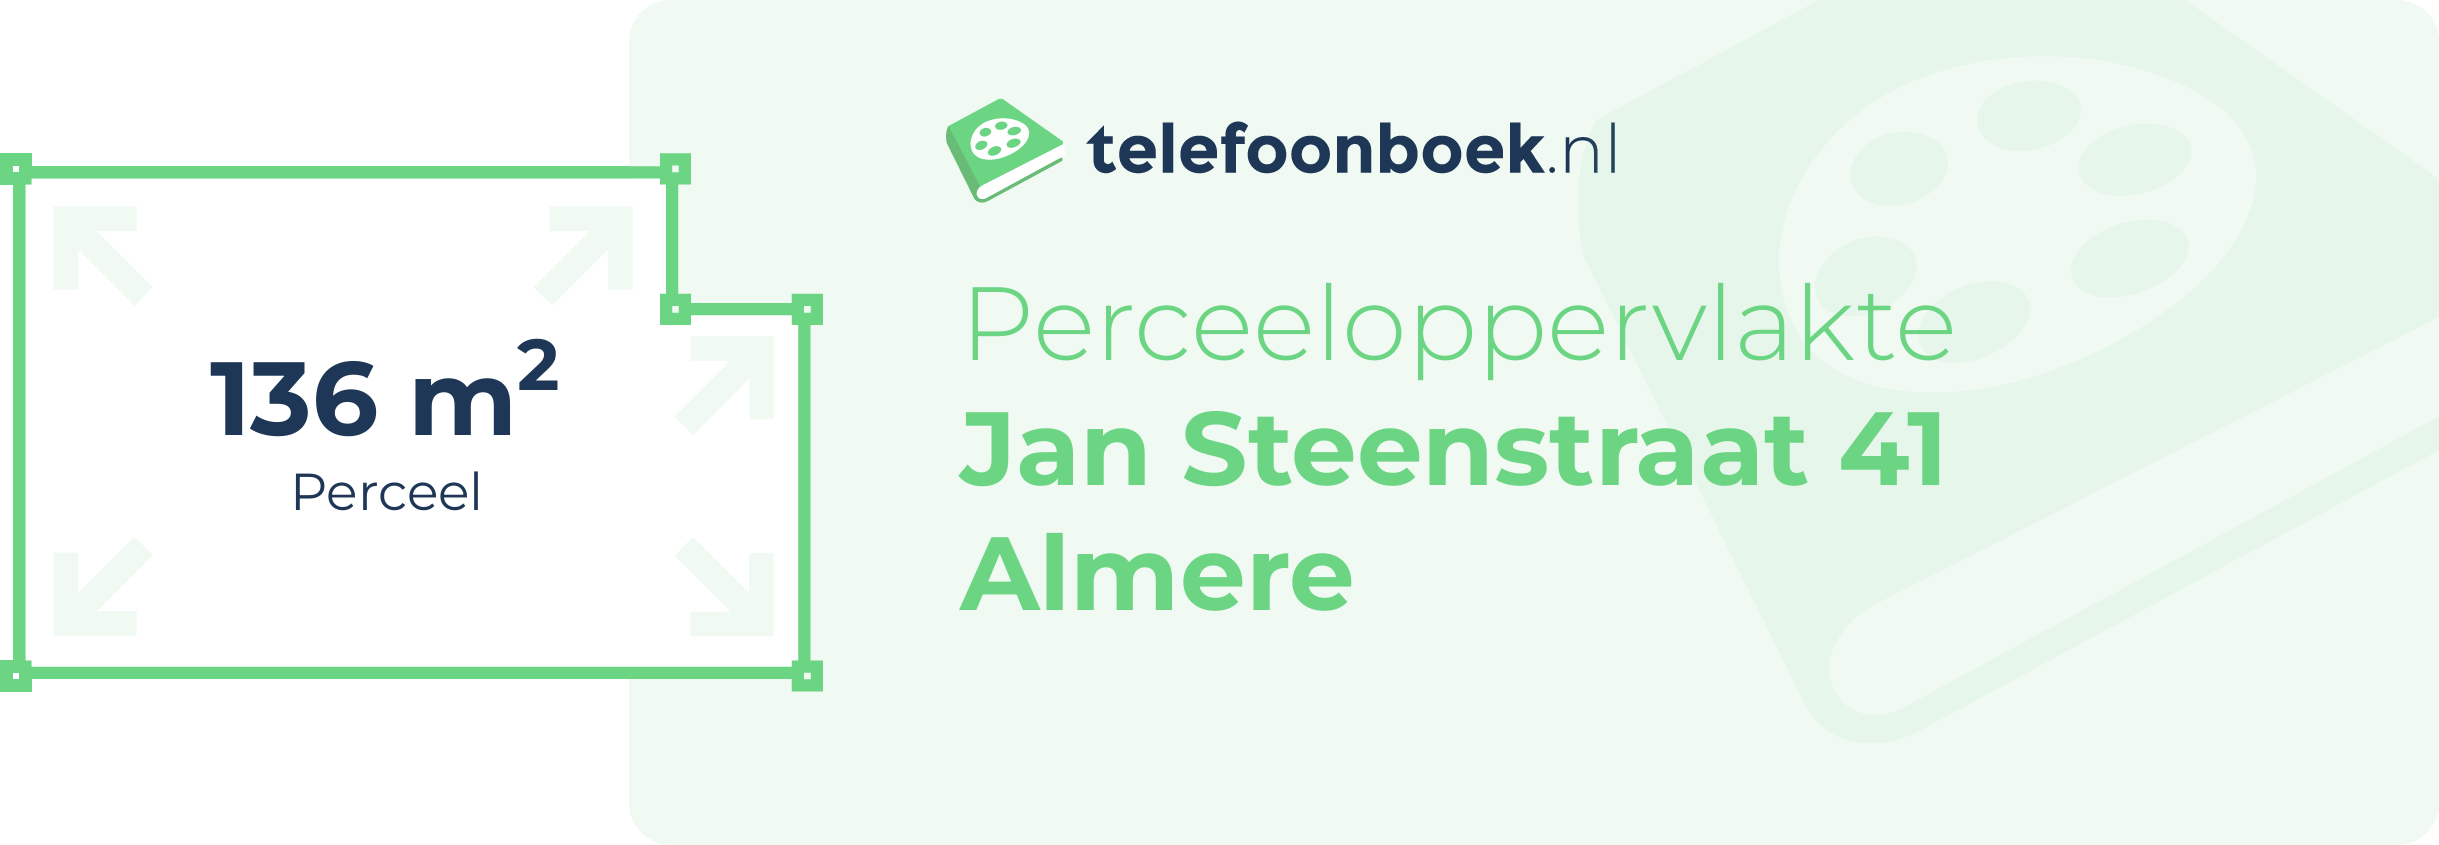 Perceeloppervlakte Jan Steenstraat 41 Almere